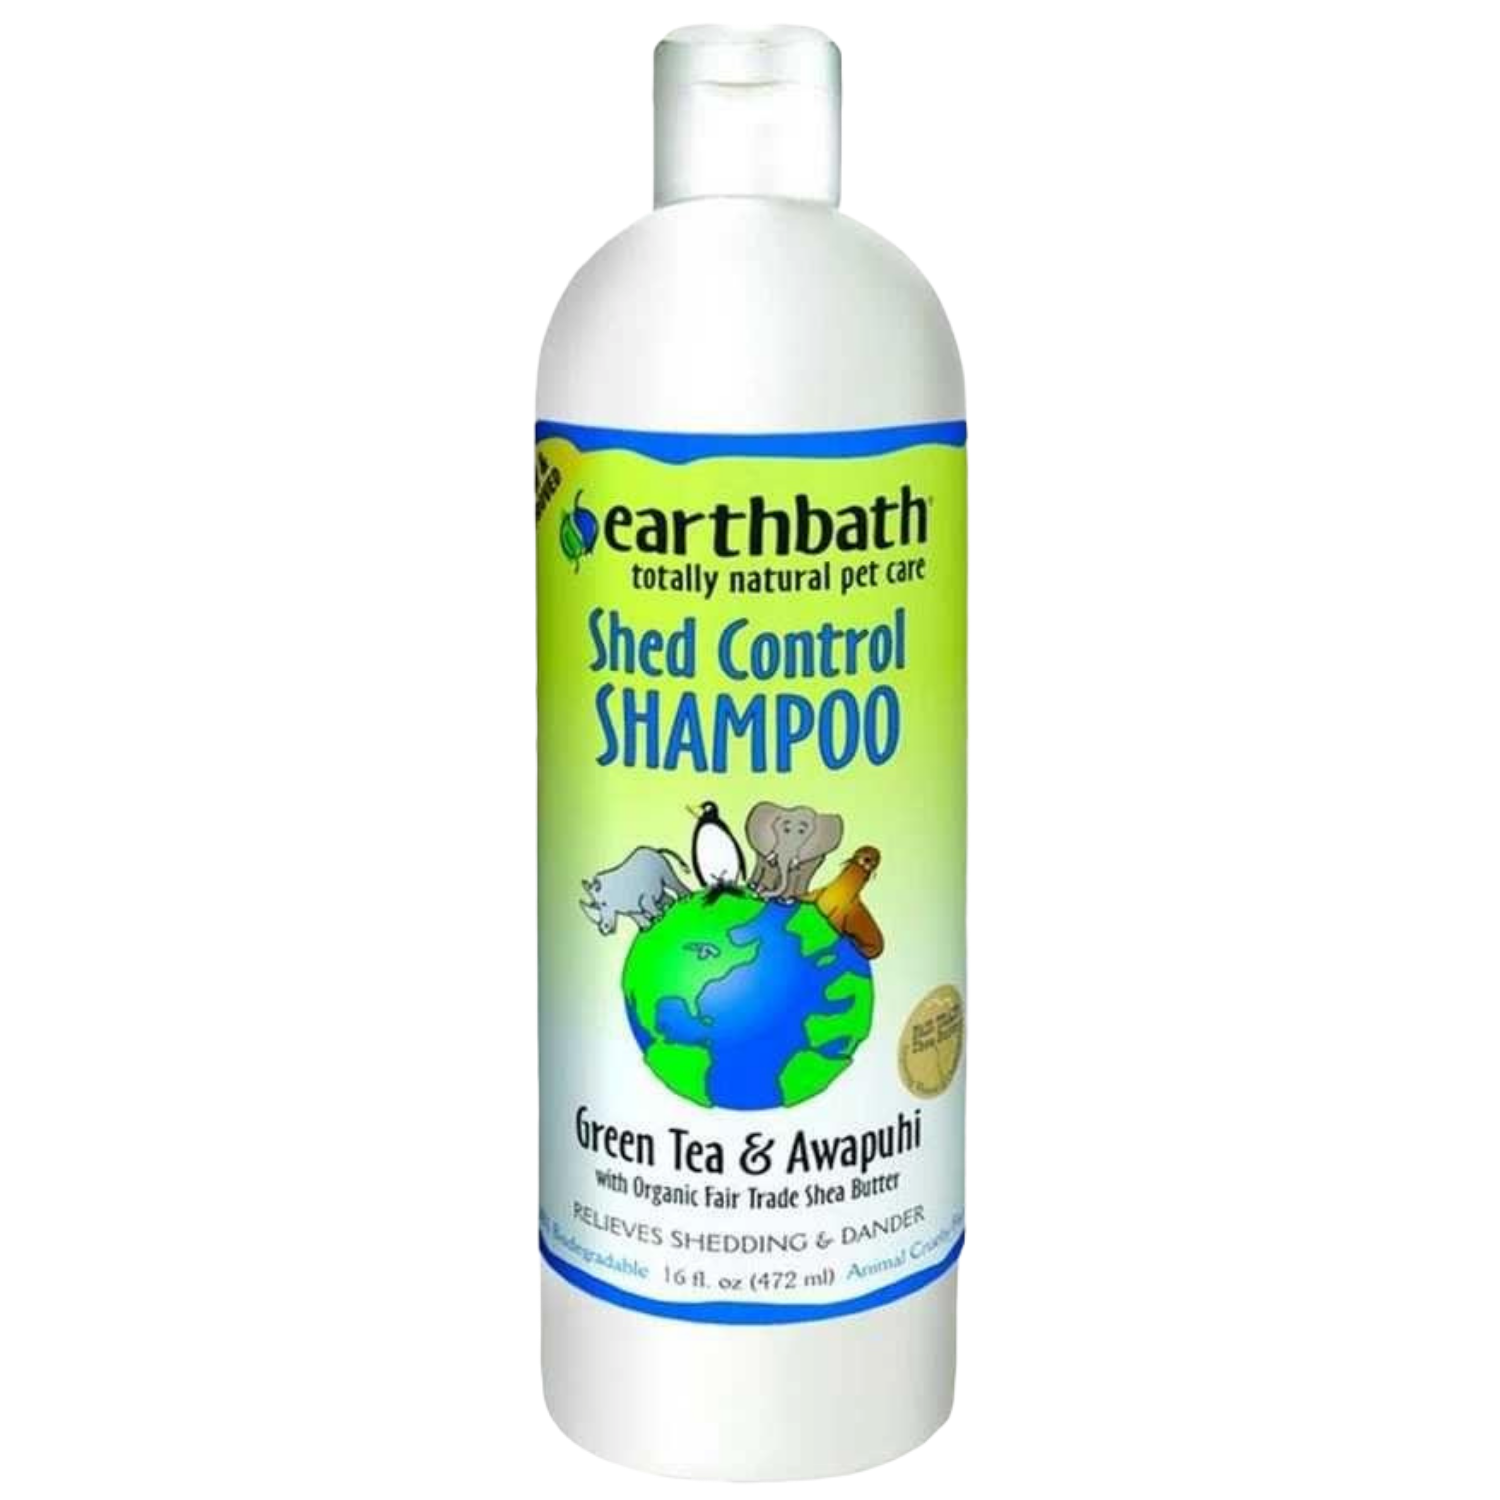 Earthbath Shed Control Shampoo (Green Tea & Awapuhi)  - 472ml / 3785ml